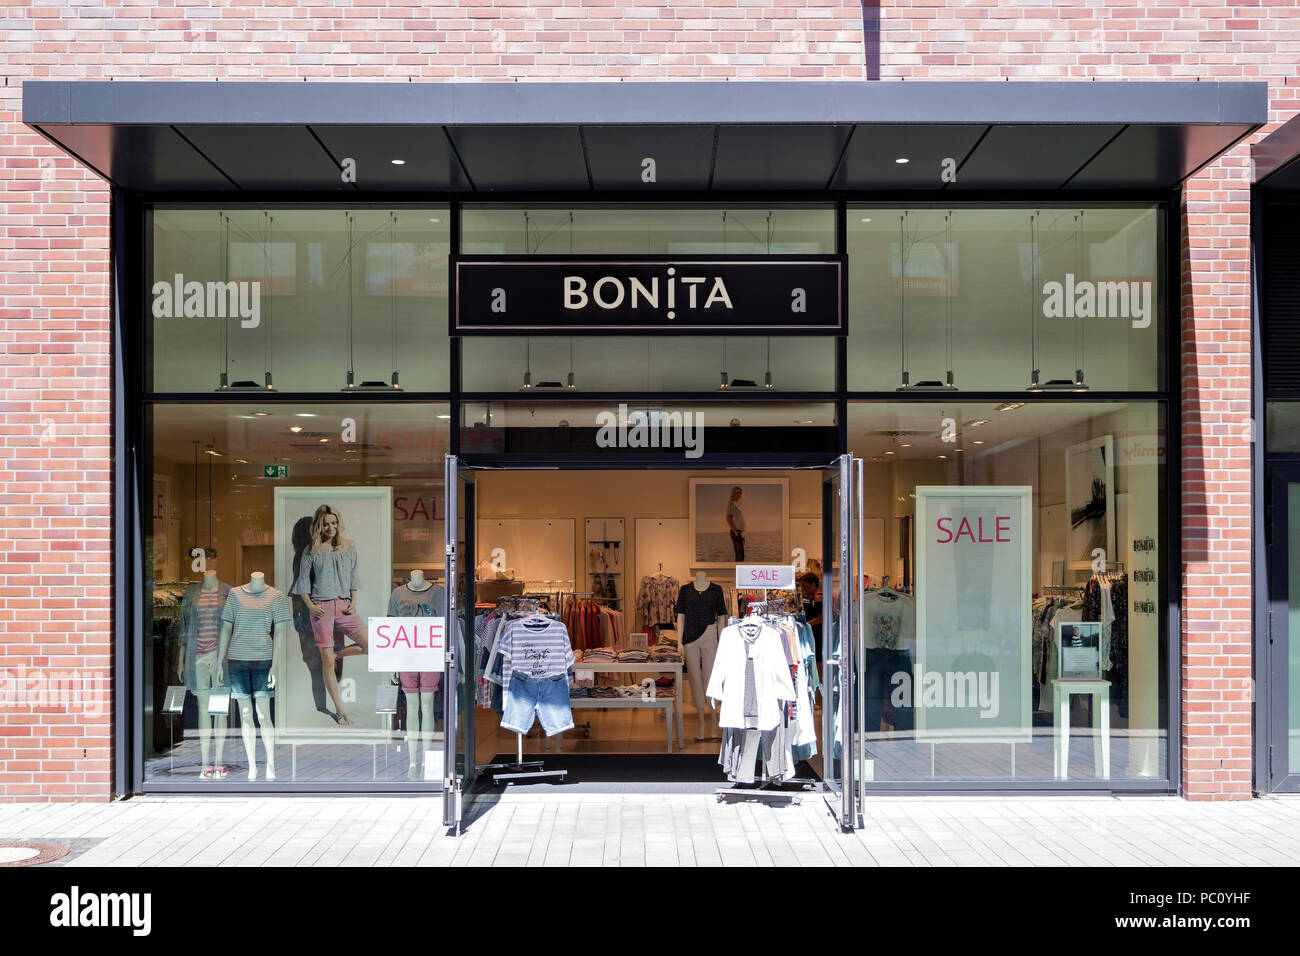 Bonita fashion -Fotos und -Bildmaterial in hoher Auflösung – Alamy